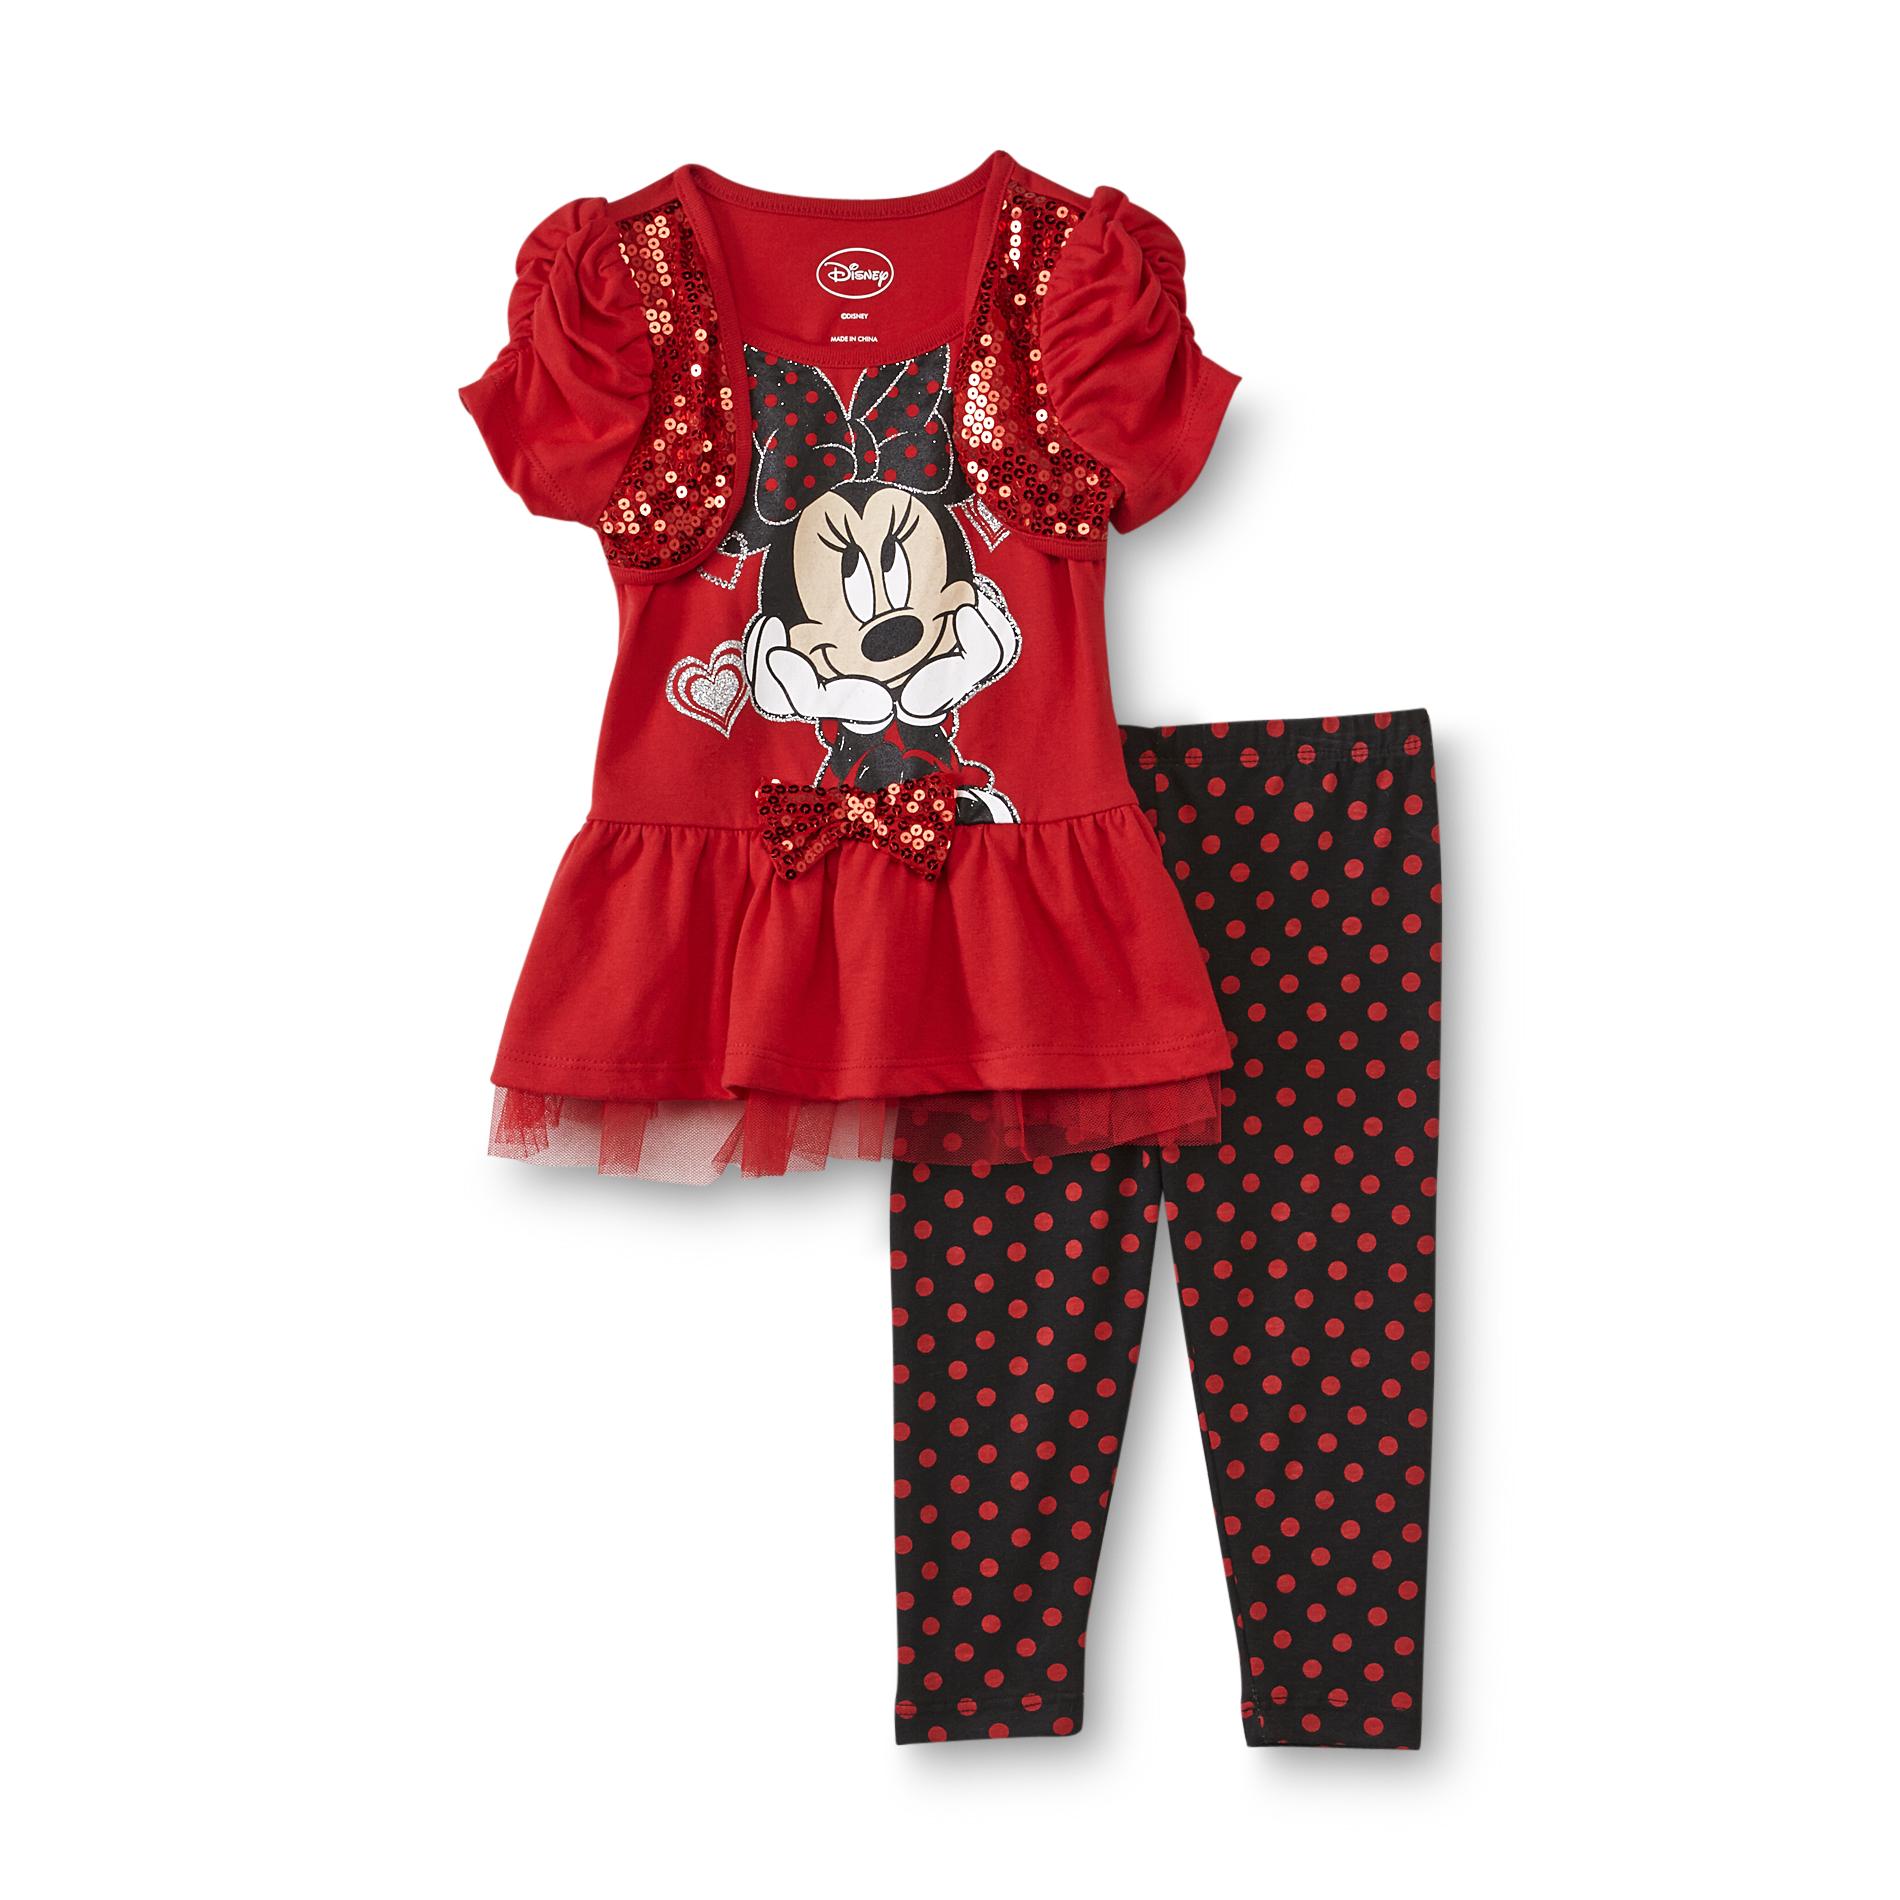 Disney Minnie Mouse Infant & Toddler Girl's Sequin Top & Leggings